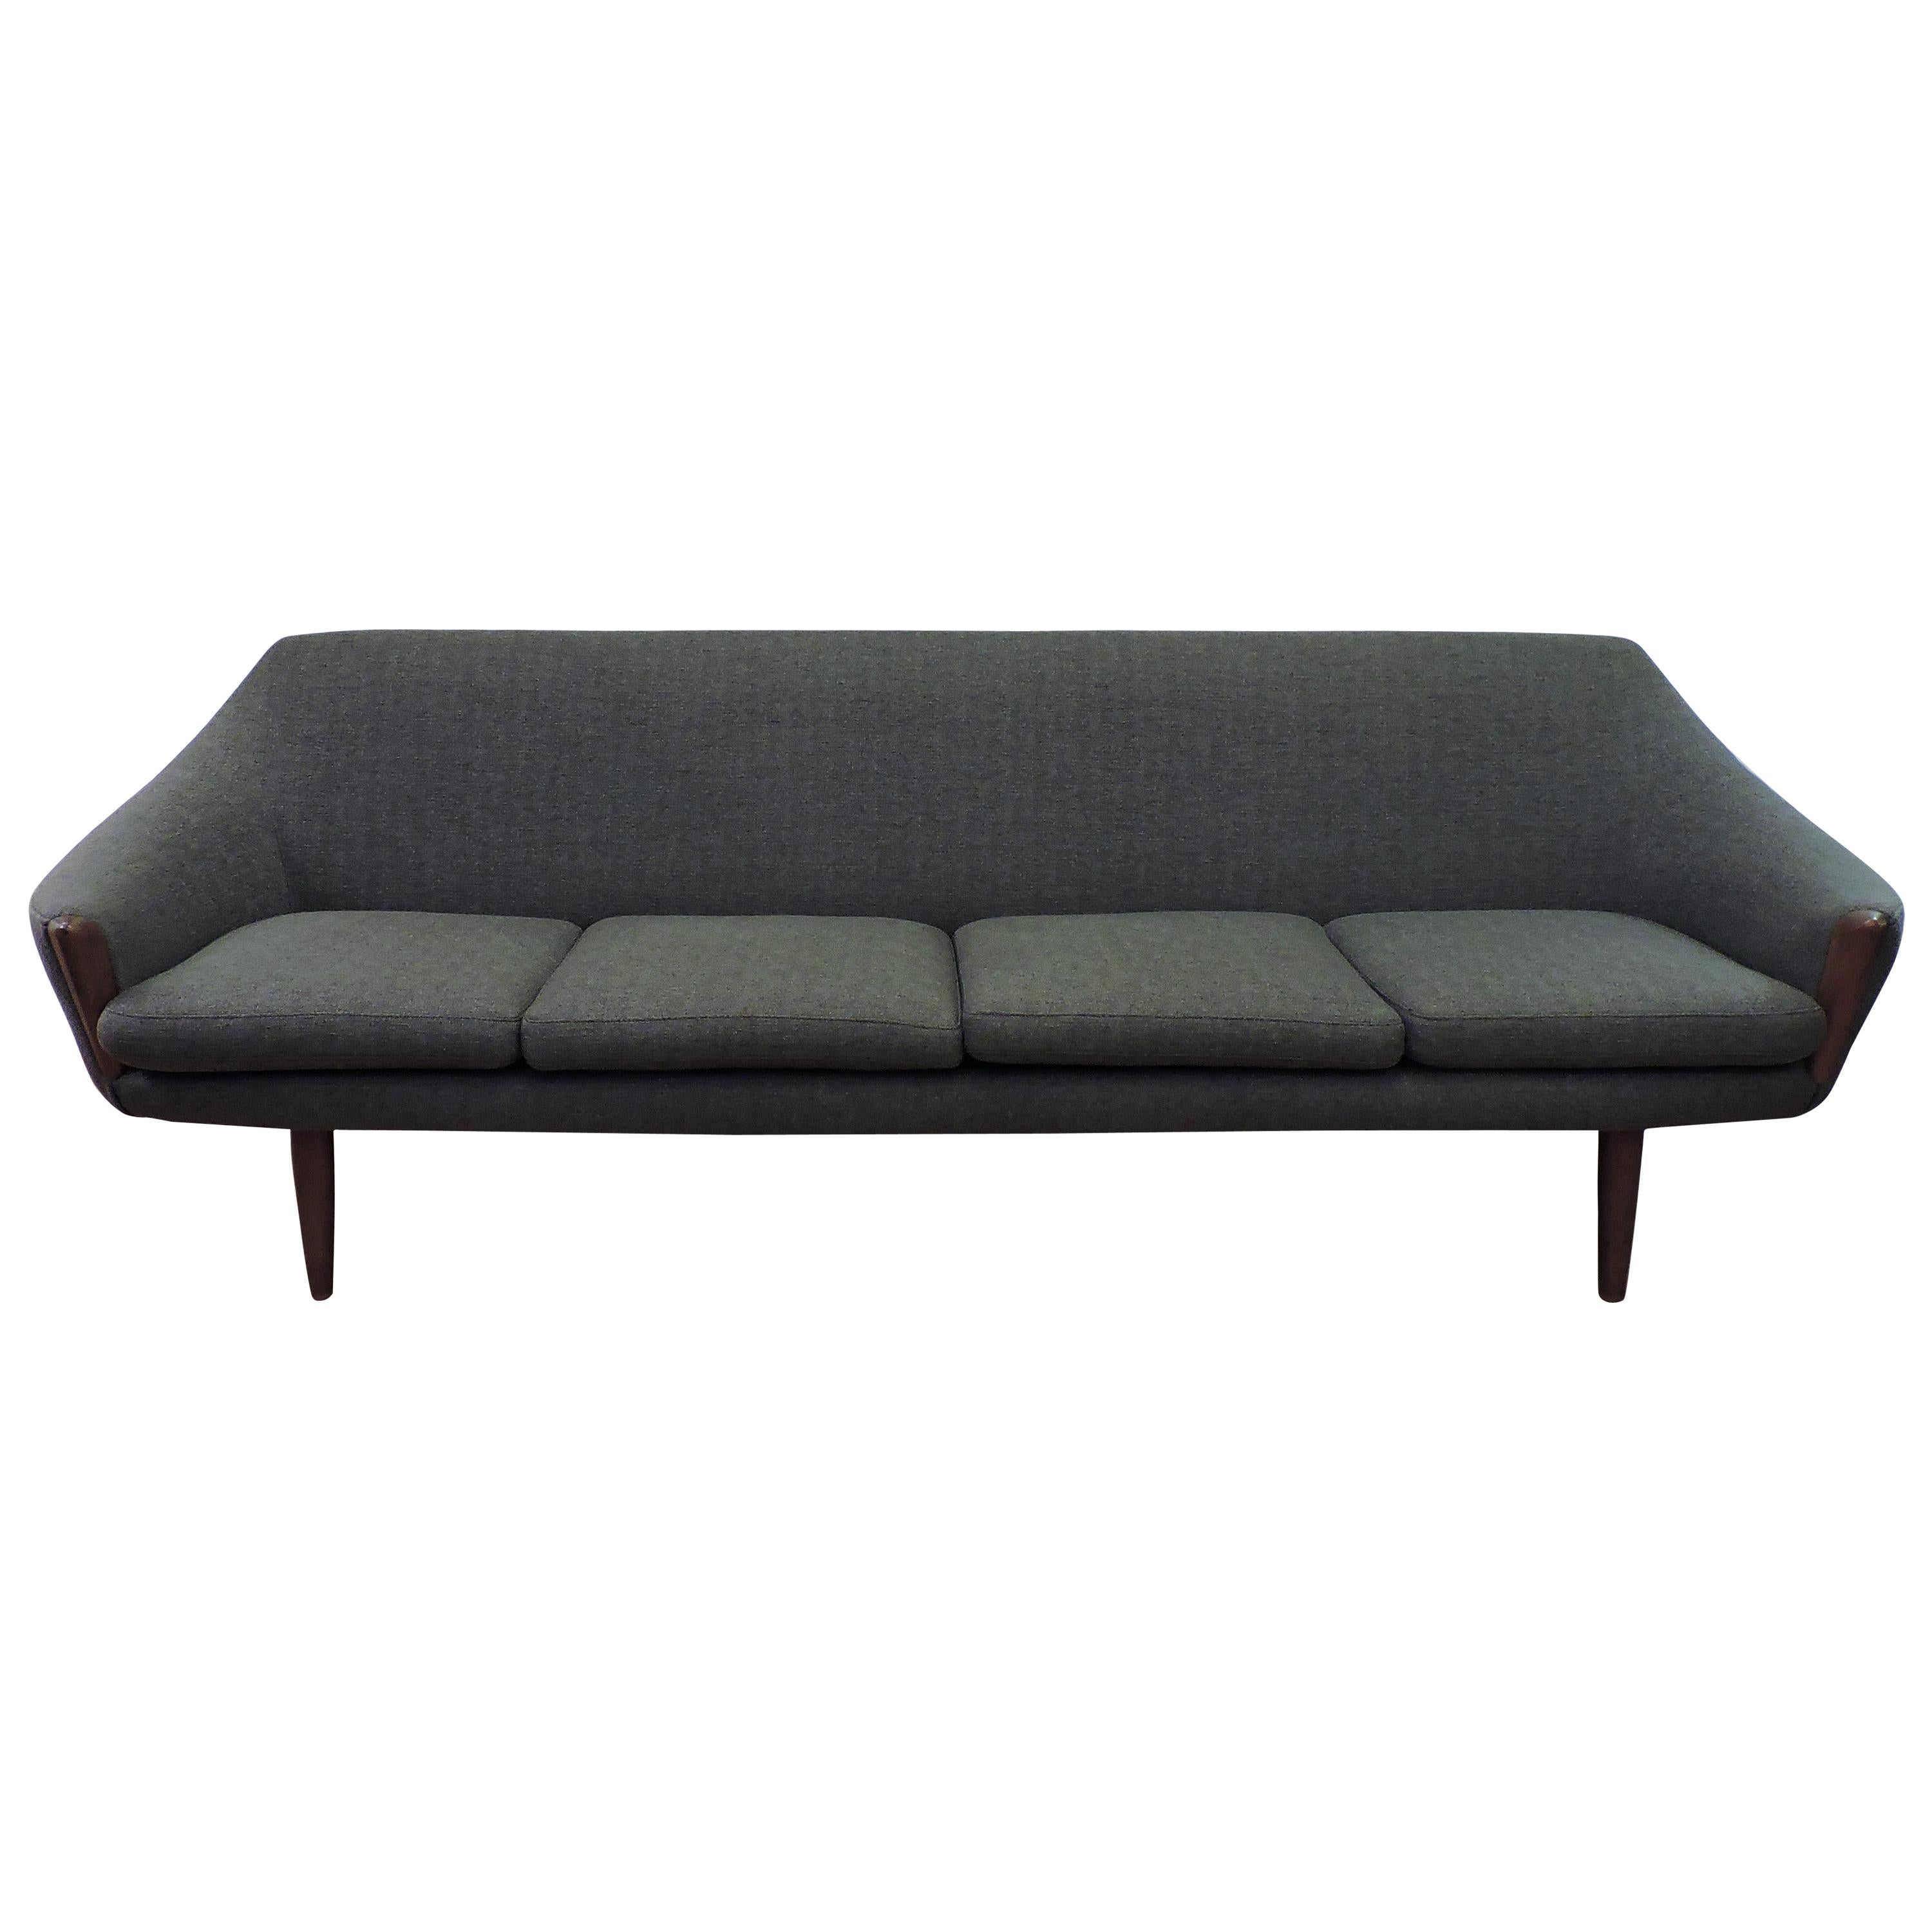 Midcentury Danish Modern Teak Four-Seat Sofa